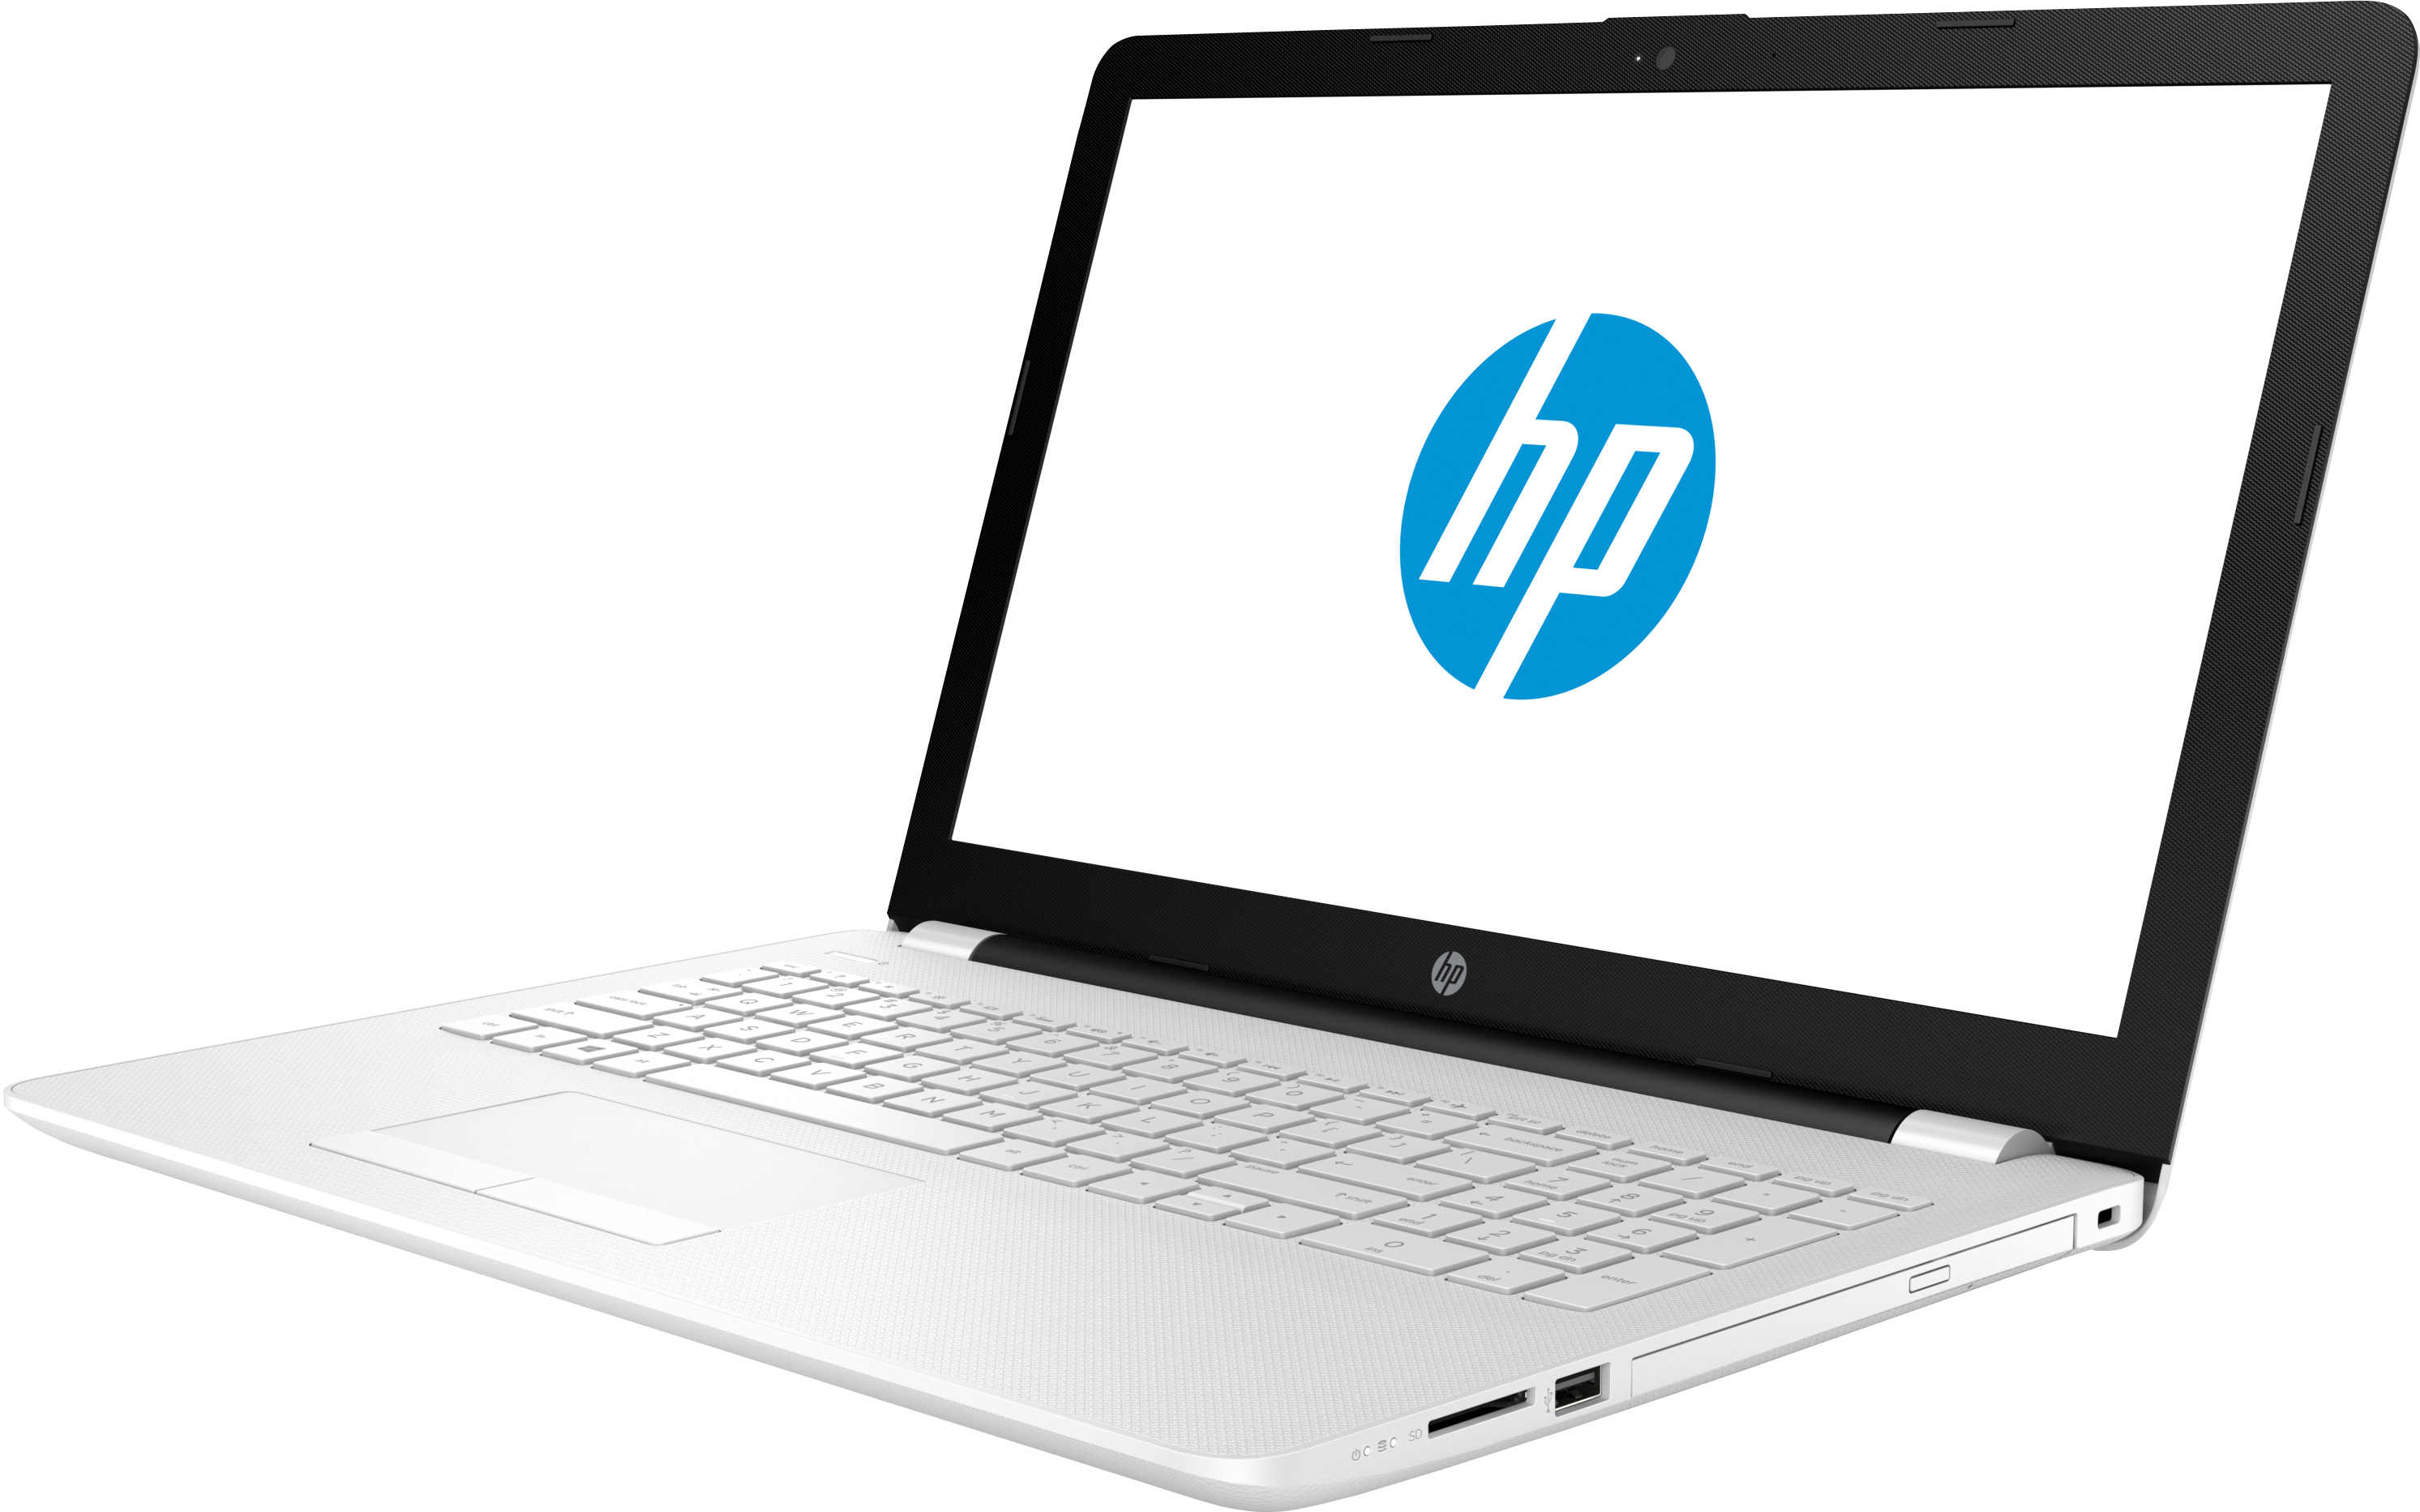 HP Laptop Repairs ANU